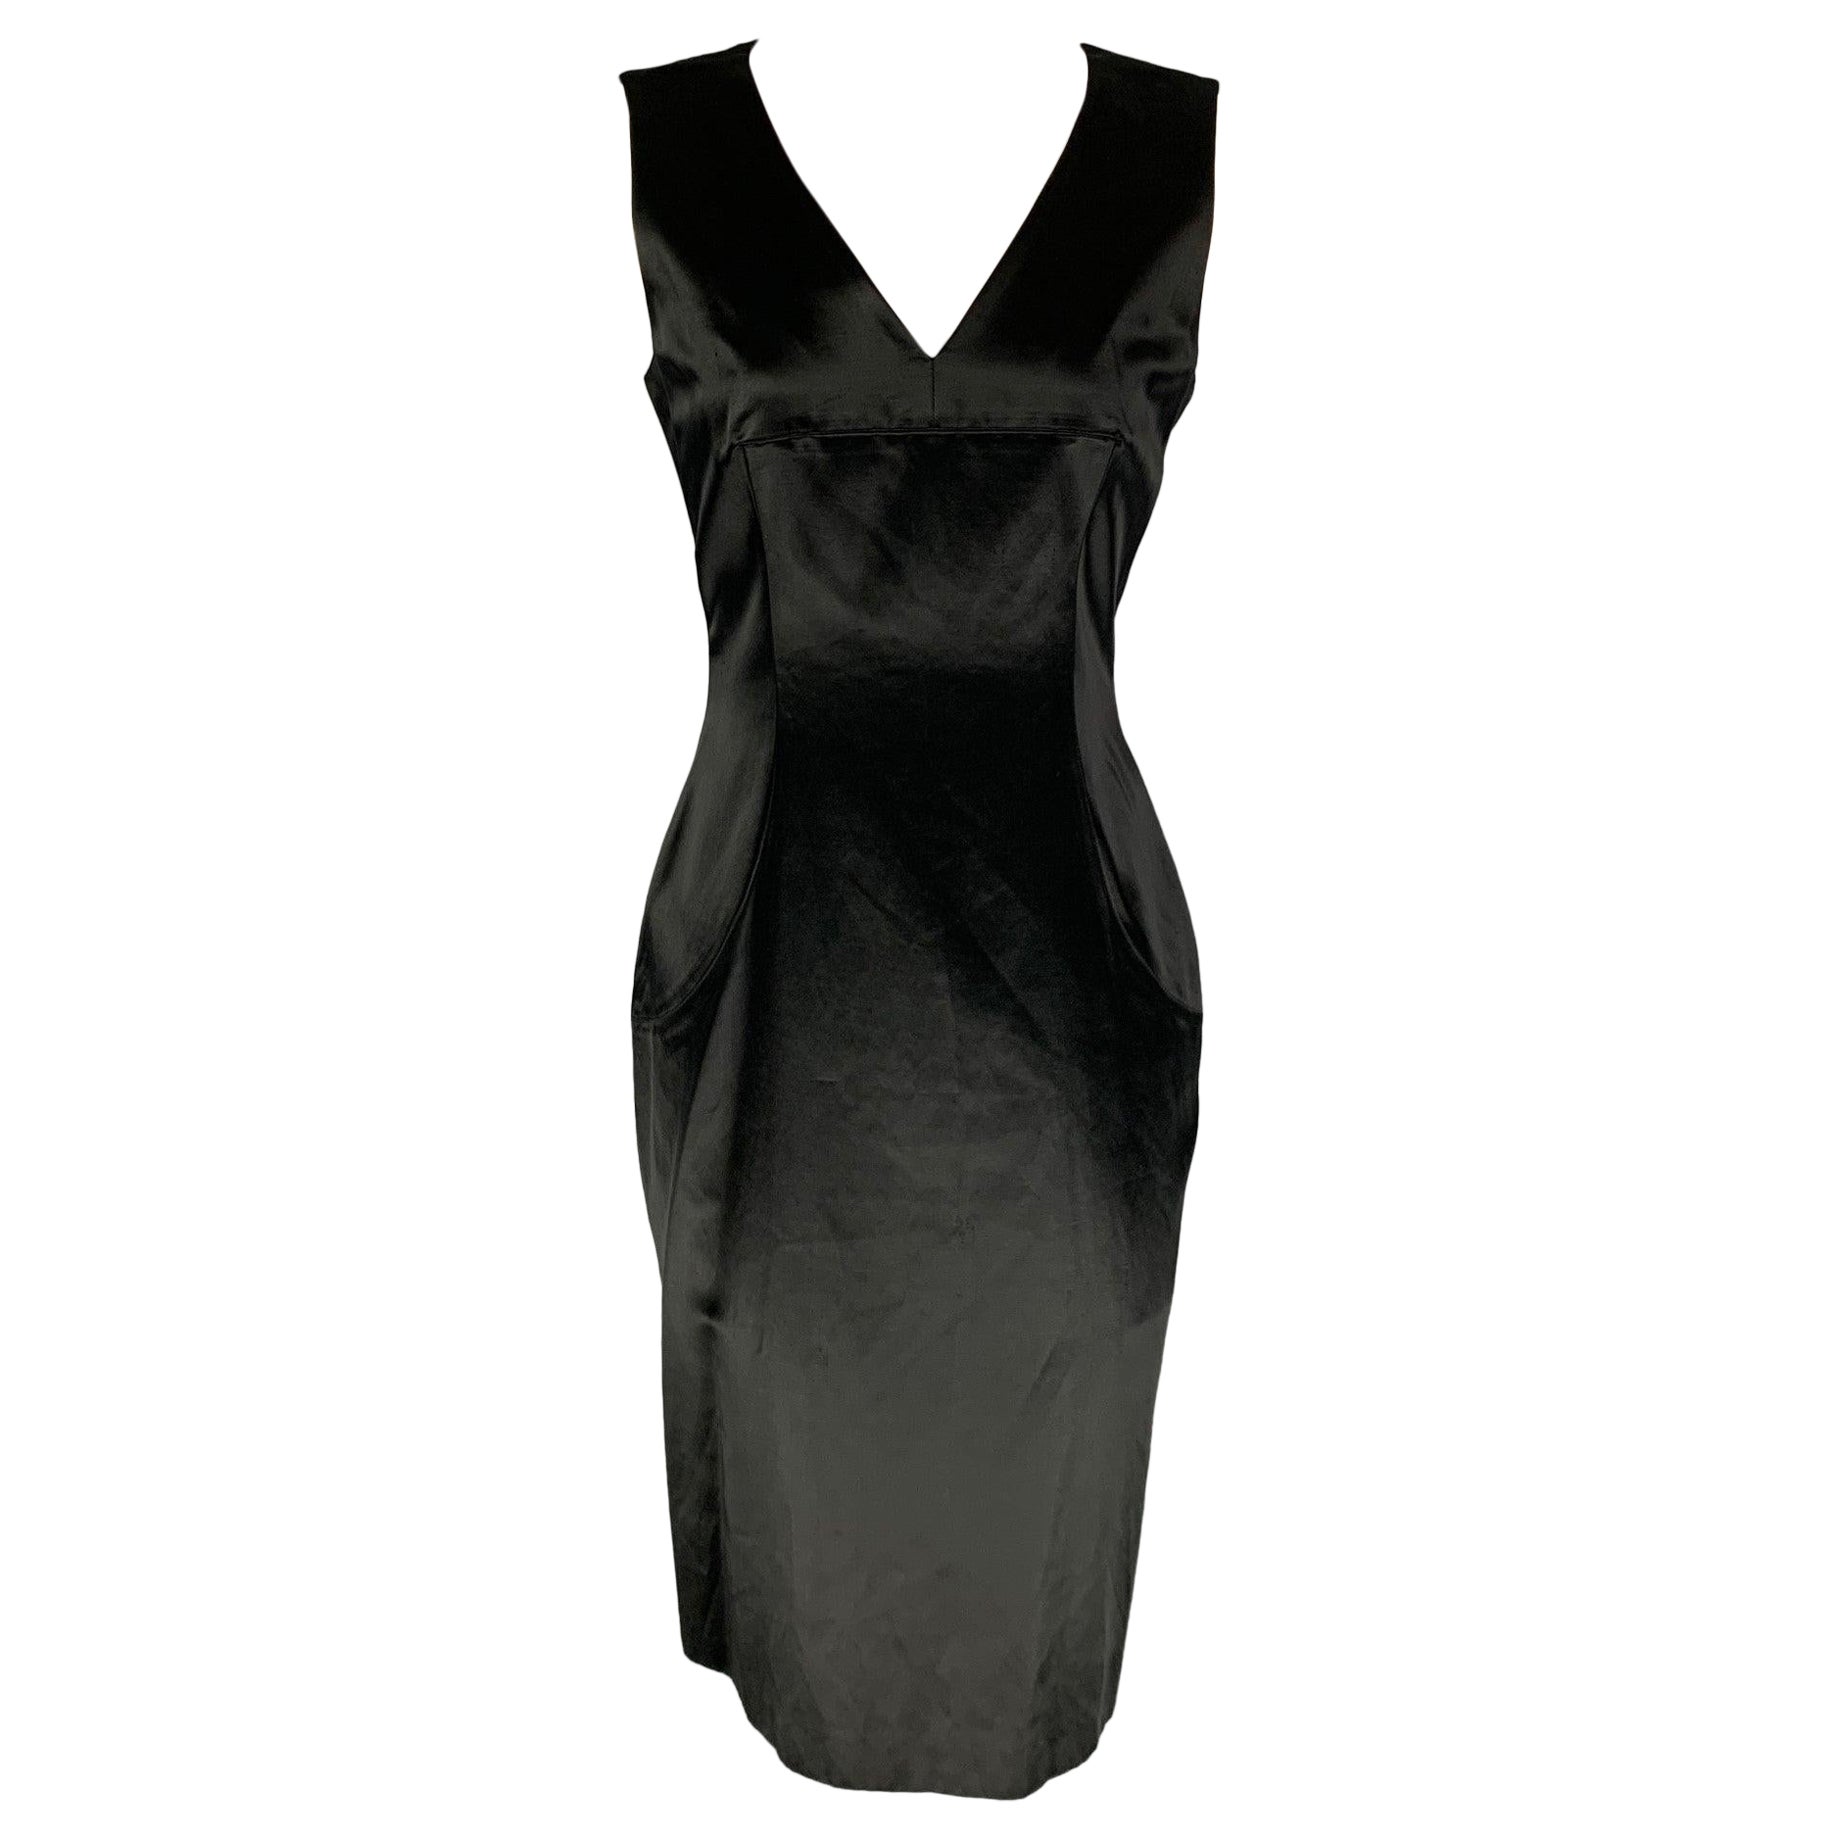 ETRO Size 6 Black Cotton Blend Sleeveless Cocktail Dress For Sale